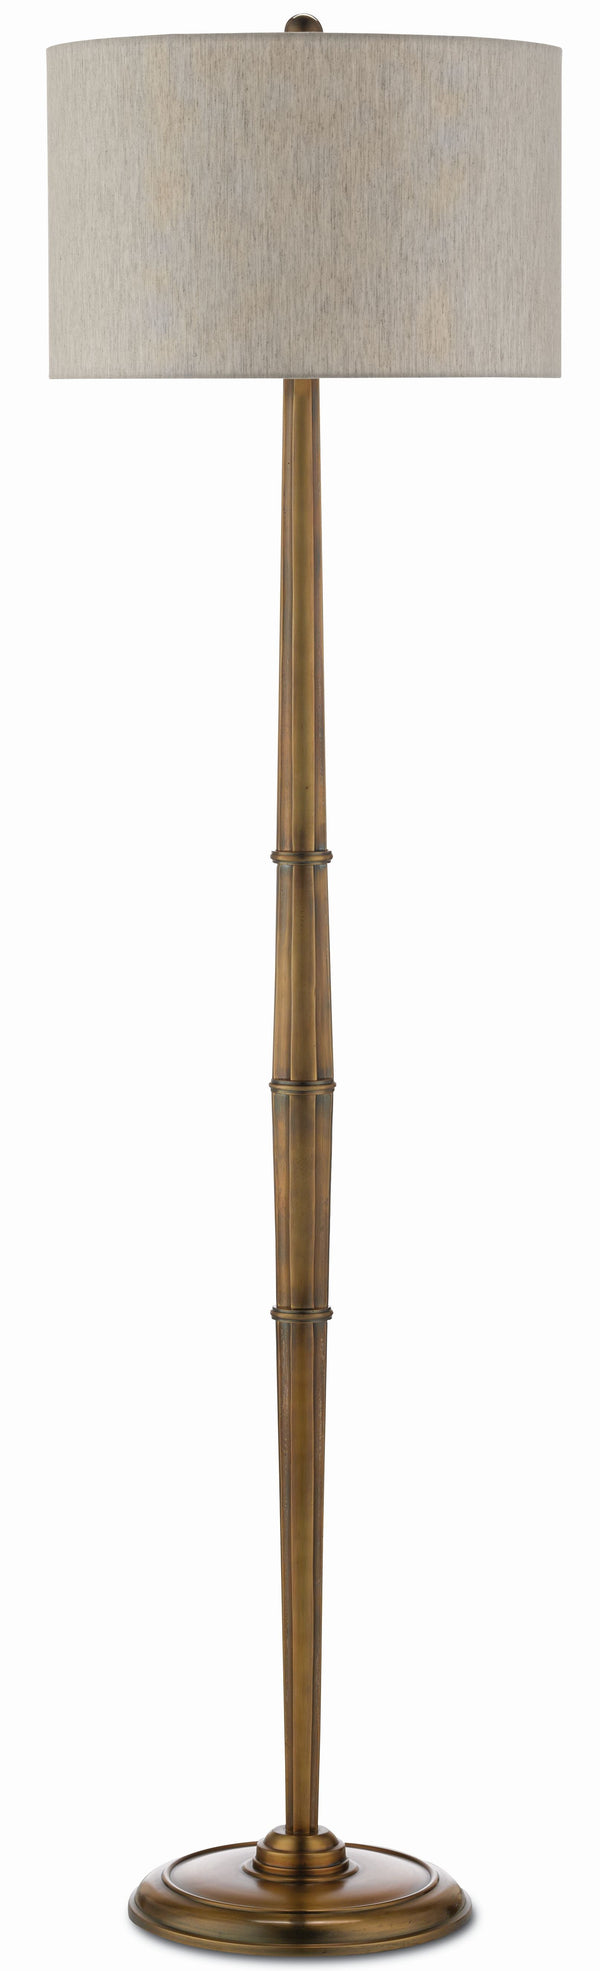 Harrelson Brass Floor Lamp